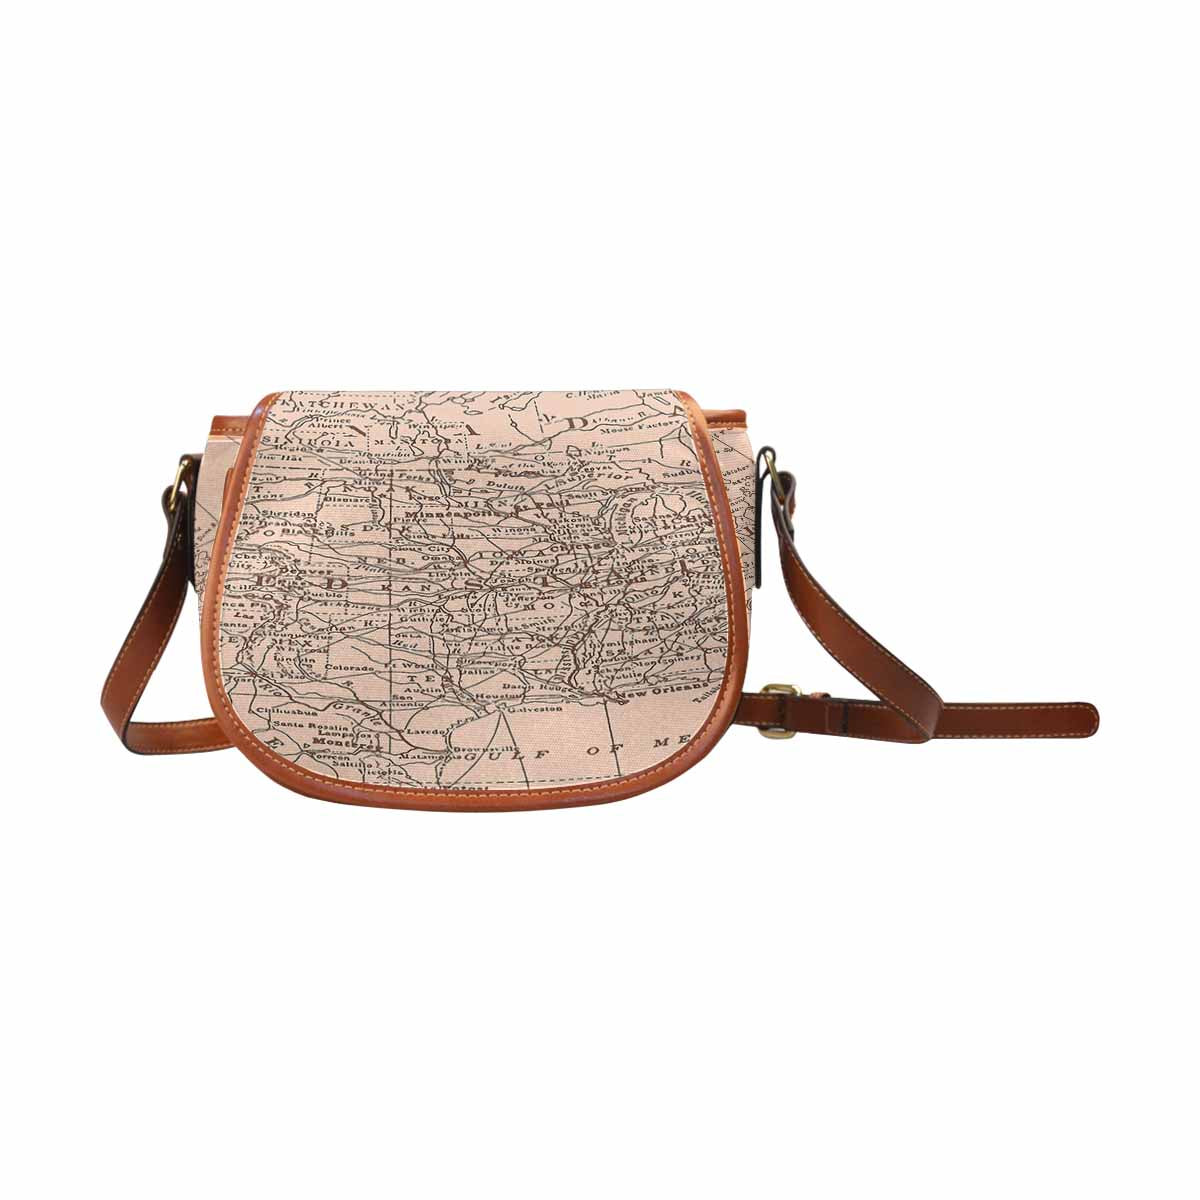 Antique Map design Handbag, saddle bag, Design 53